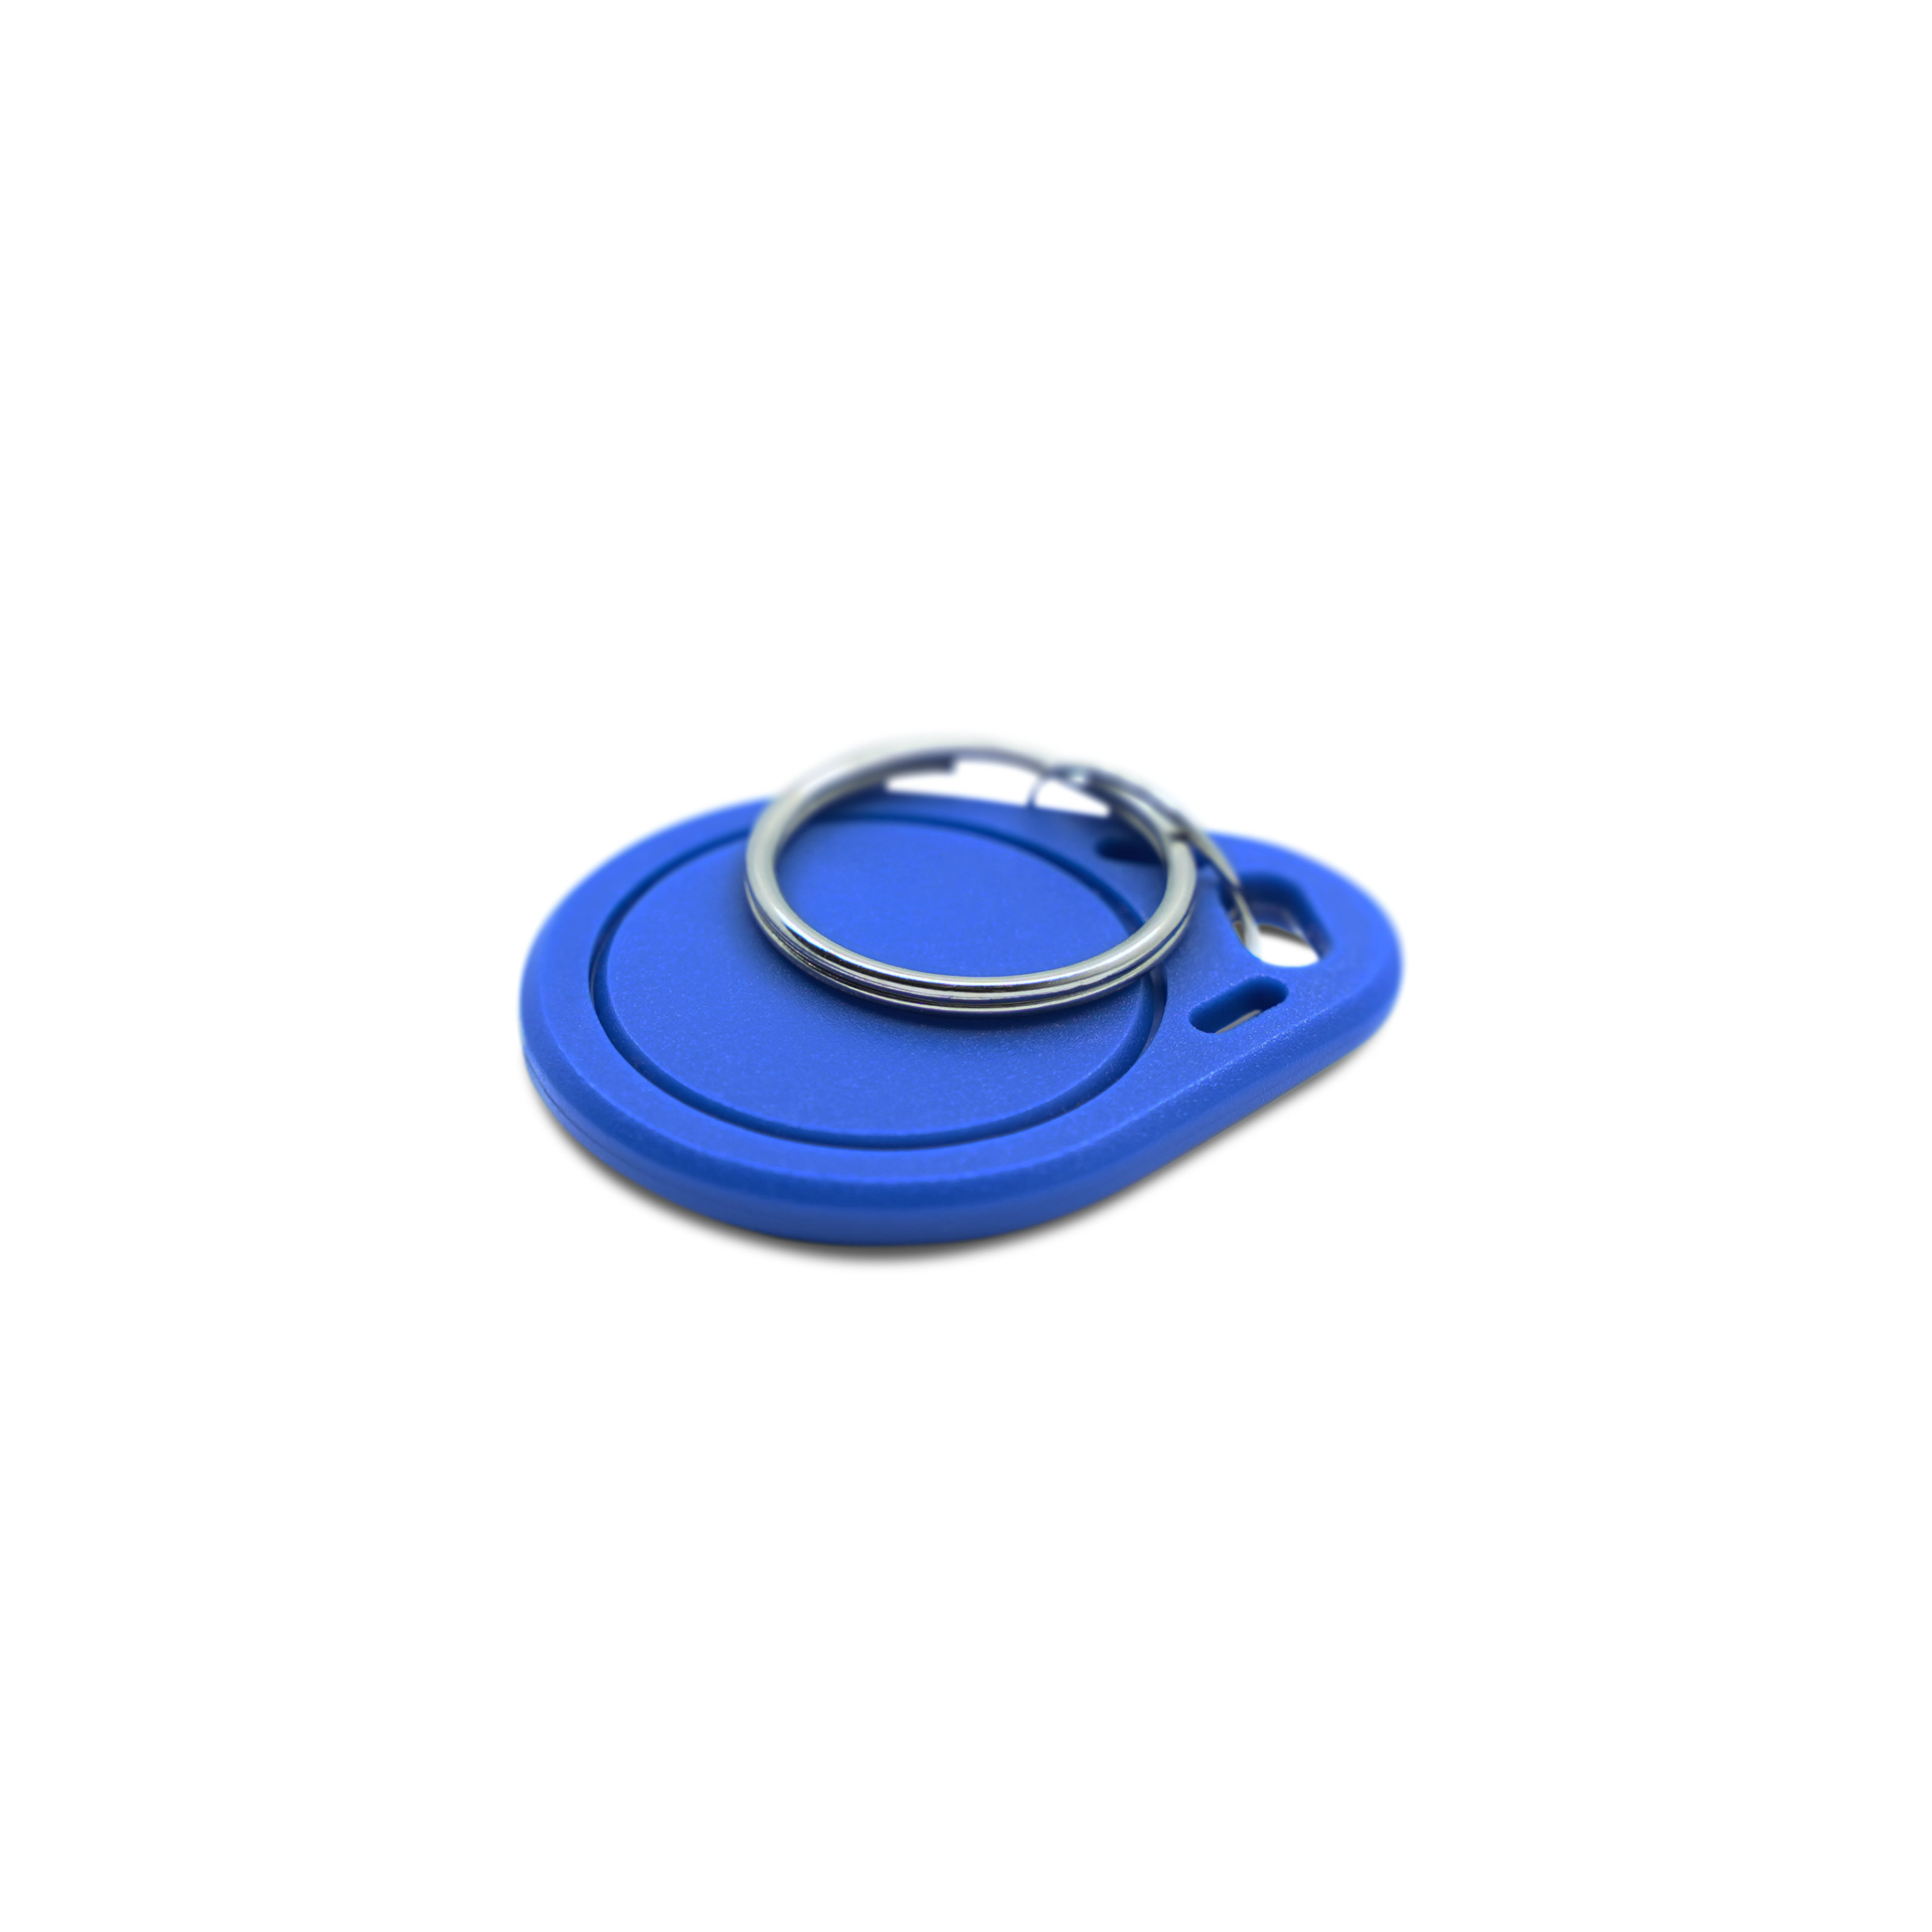 NFC tag ABS - 40 x 32 mm - MIFARE DESFire EV1 8k - 8192 byte - blue